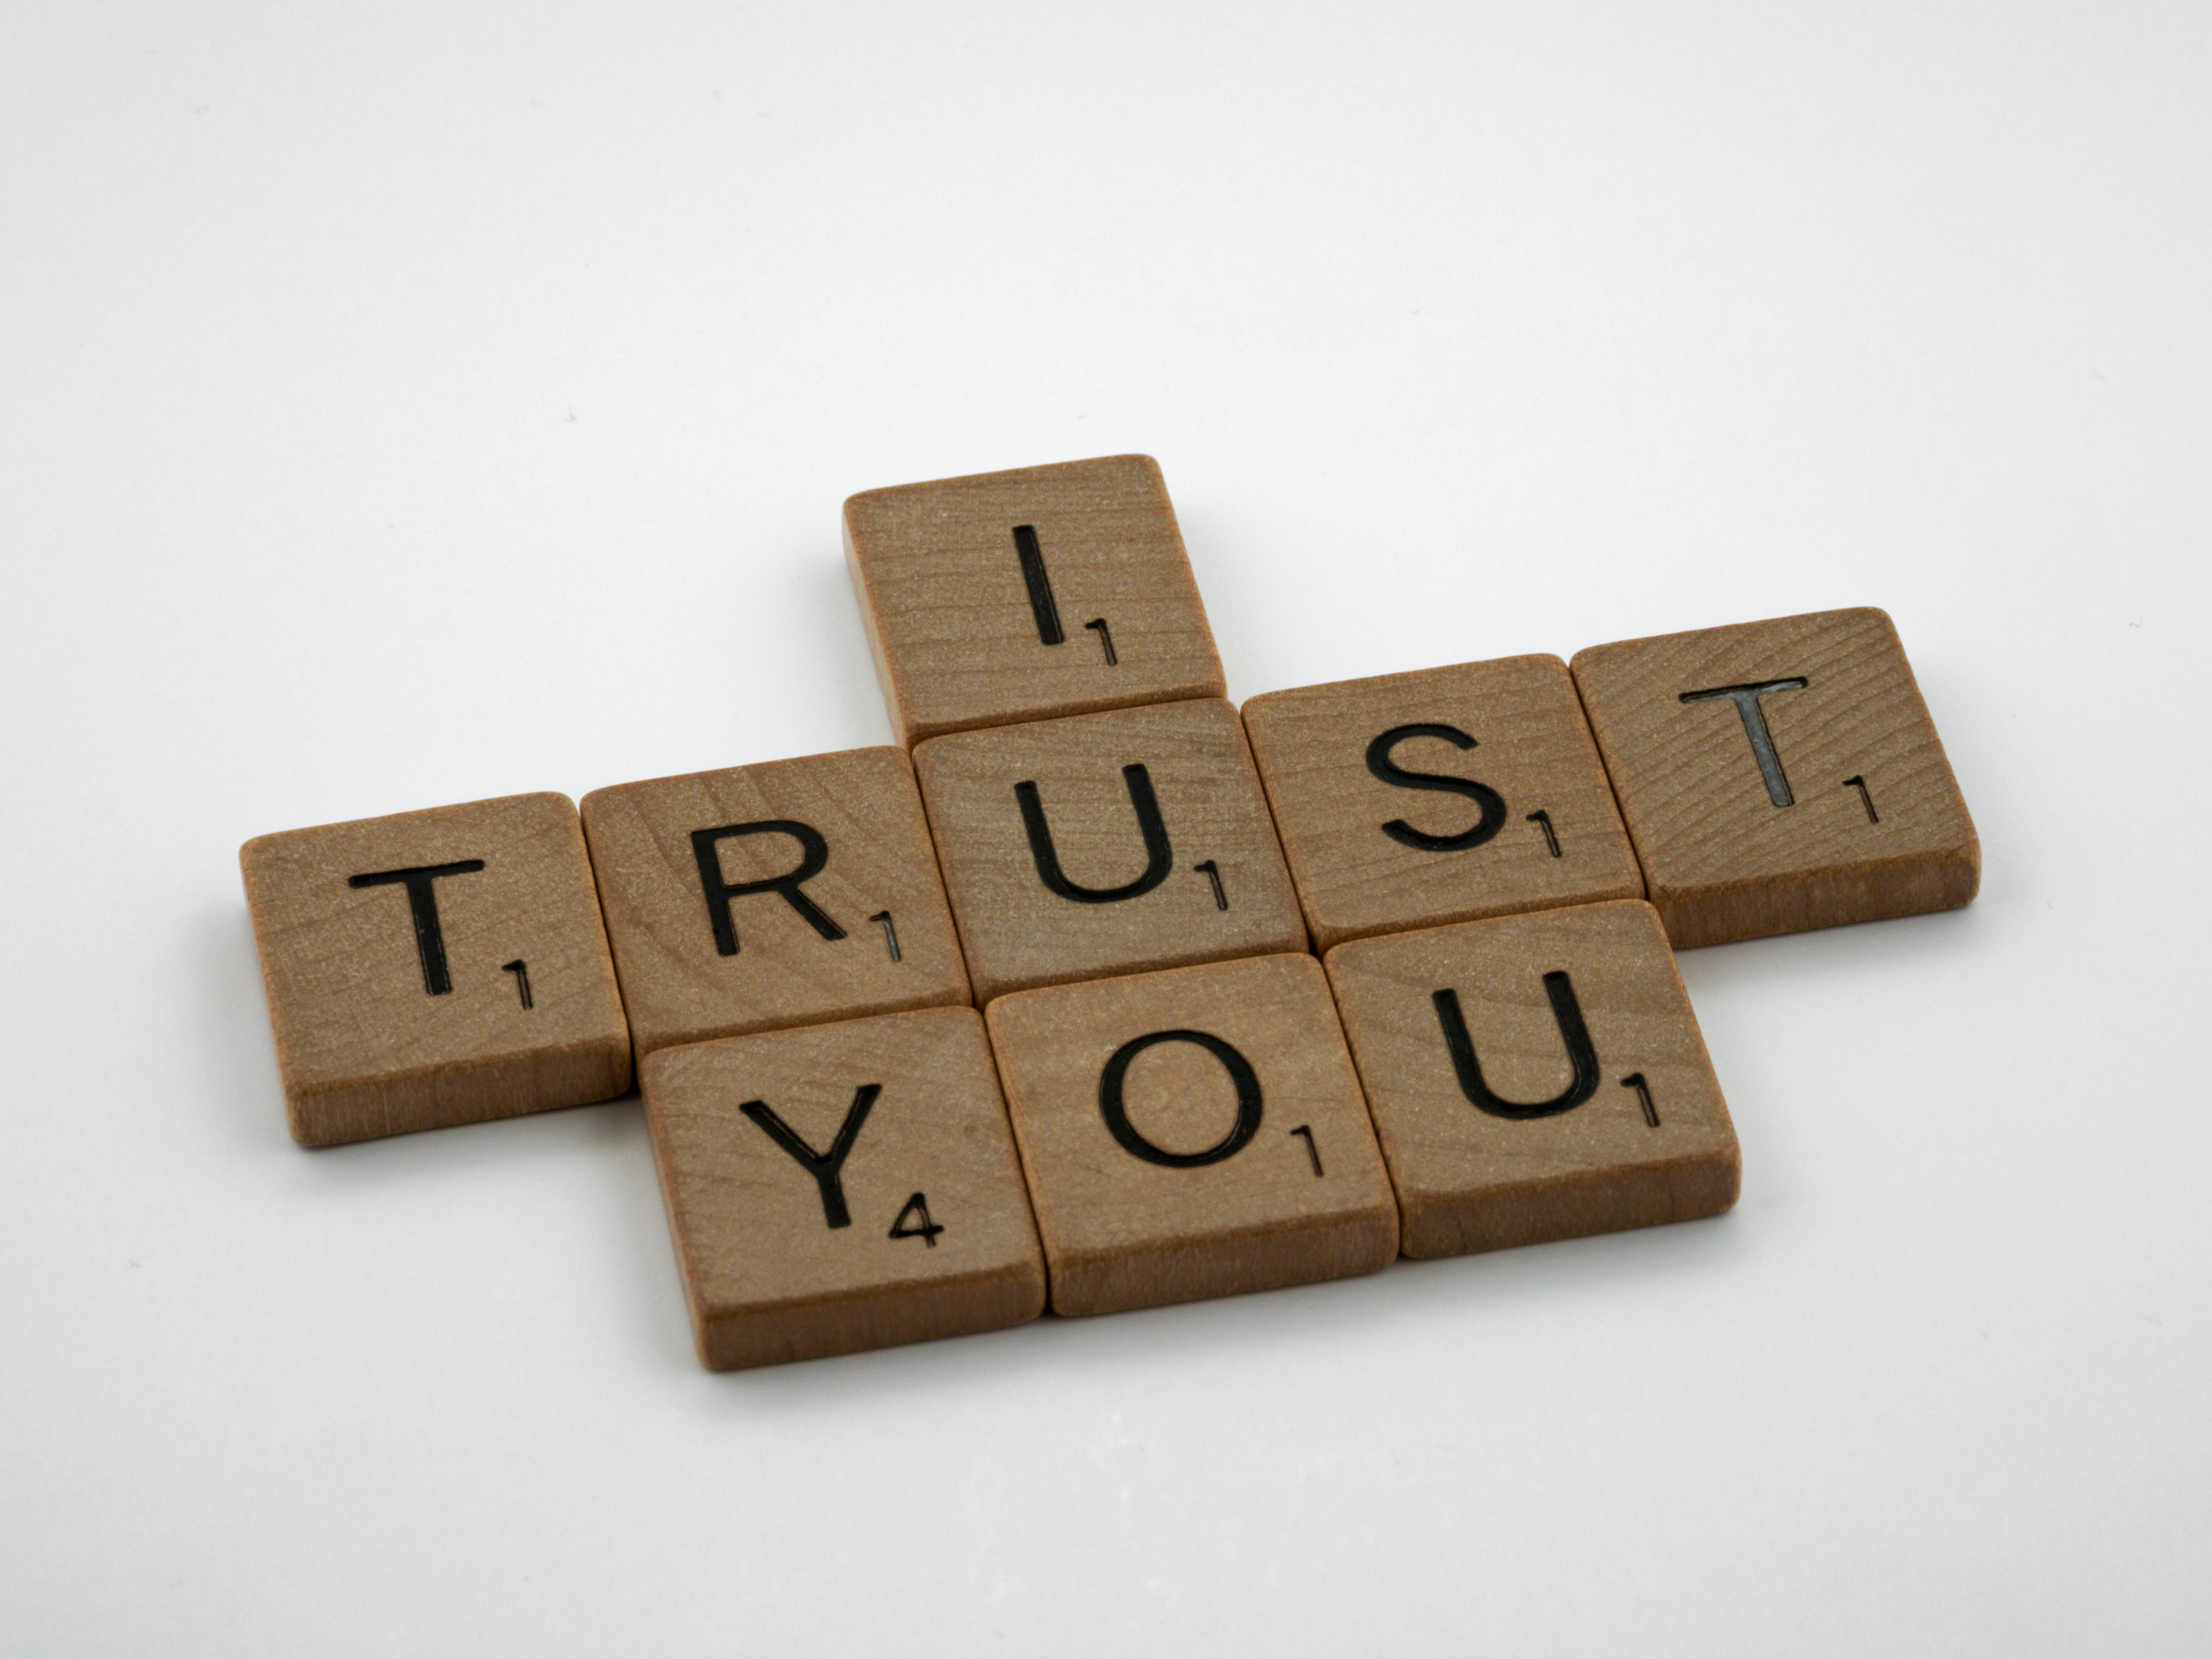 Scrabble letter blocks spelling out "I trust you." We offer GA car transport services like enclosed auto transport.